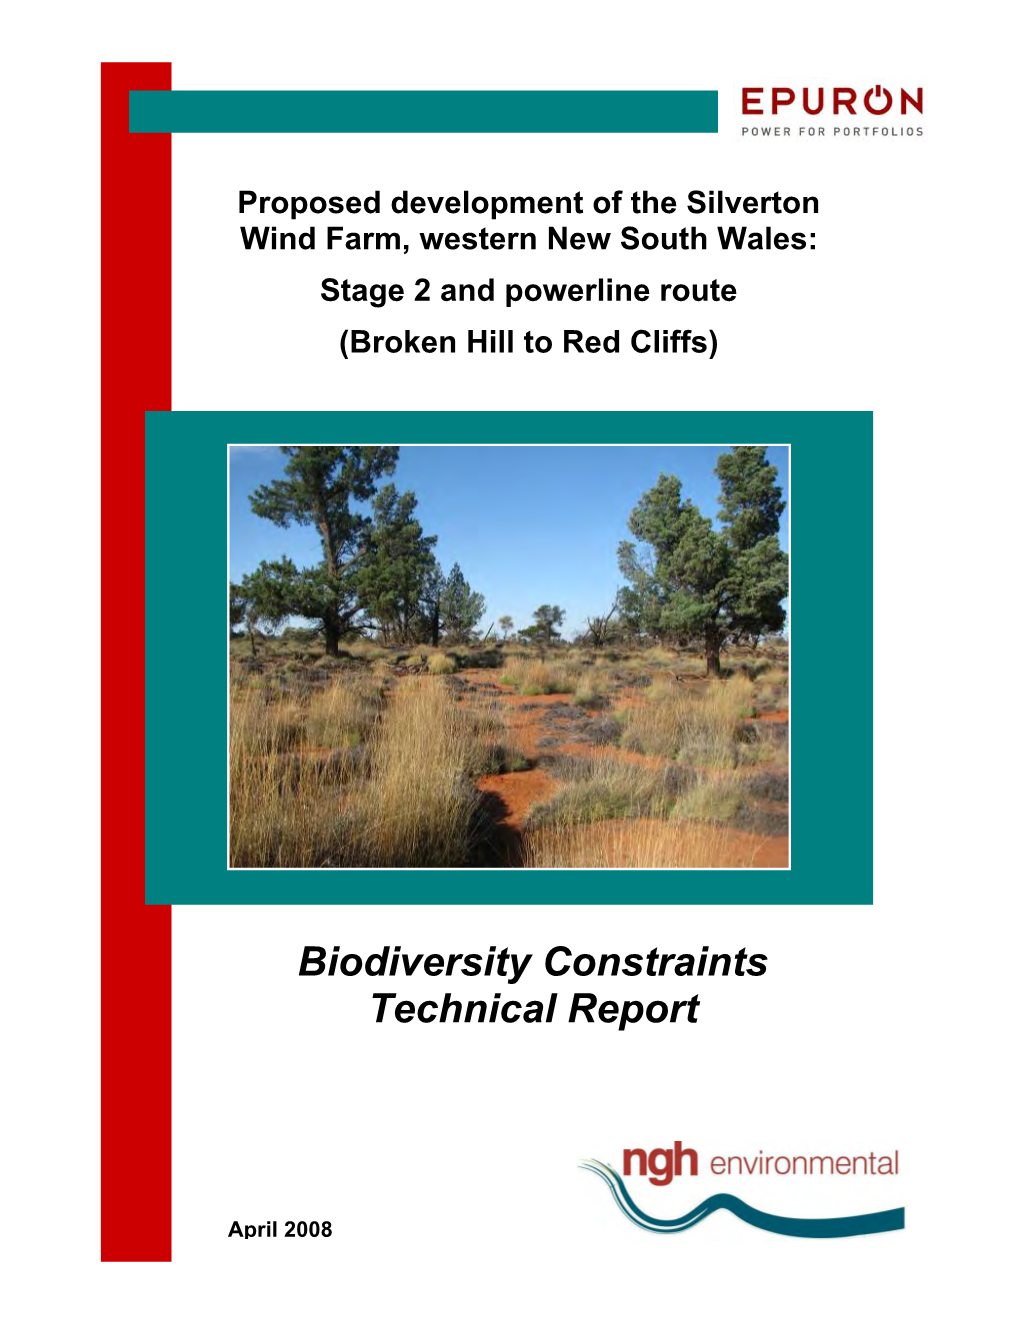 Biodiversity Constraints Technical Report